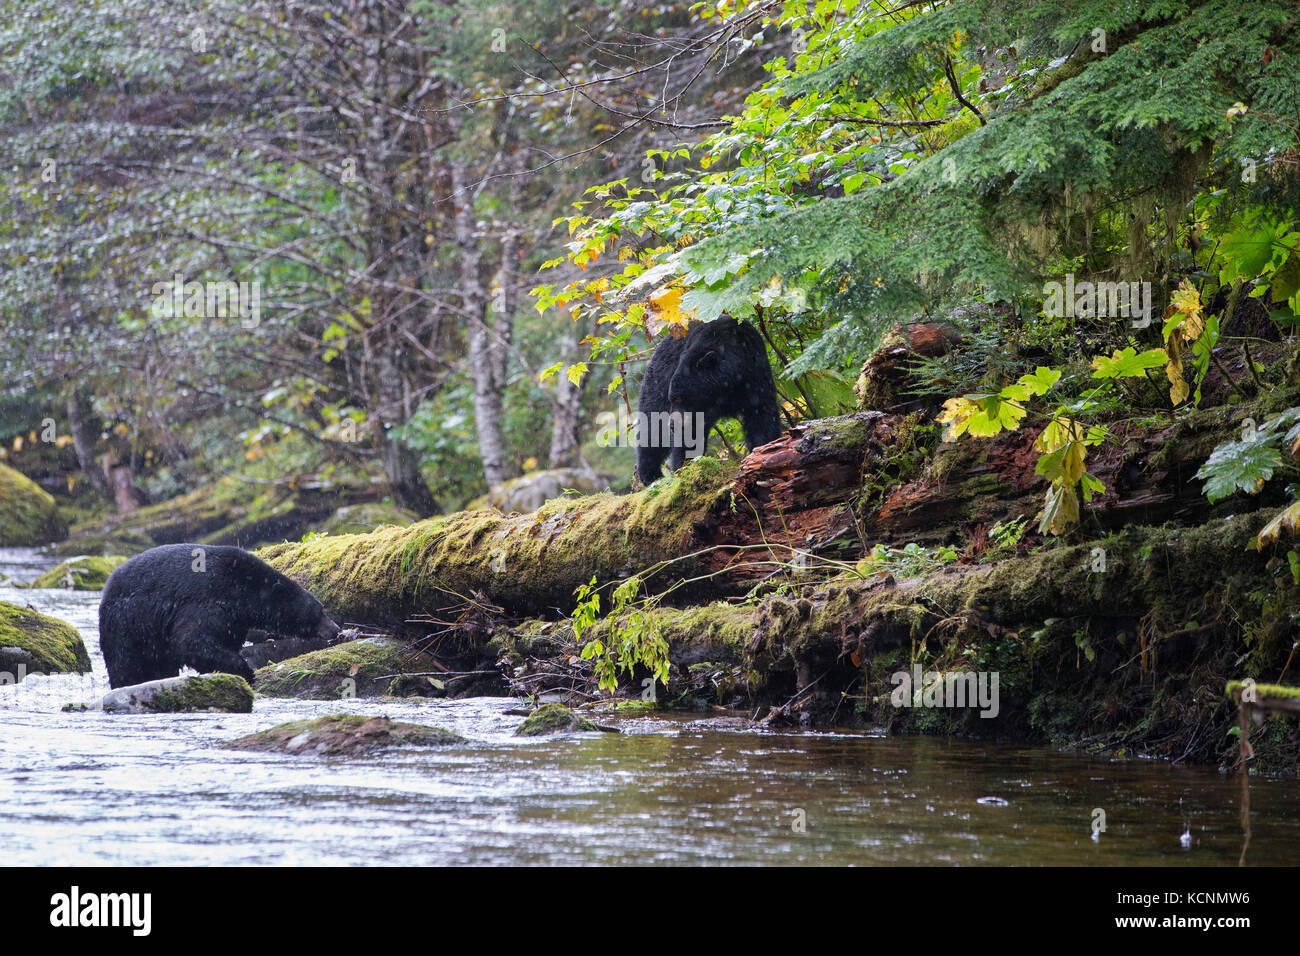 Black spirit bear (Ursus americanus kermodei), confrontation between male (bottom) and female with off-camera cub, along salmon (Oncorhynchus sp.) spawning creek, Great Bear Rainforest, British Columbia, Canada Stock Photo